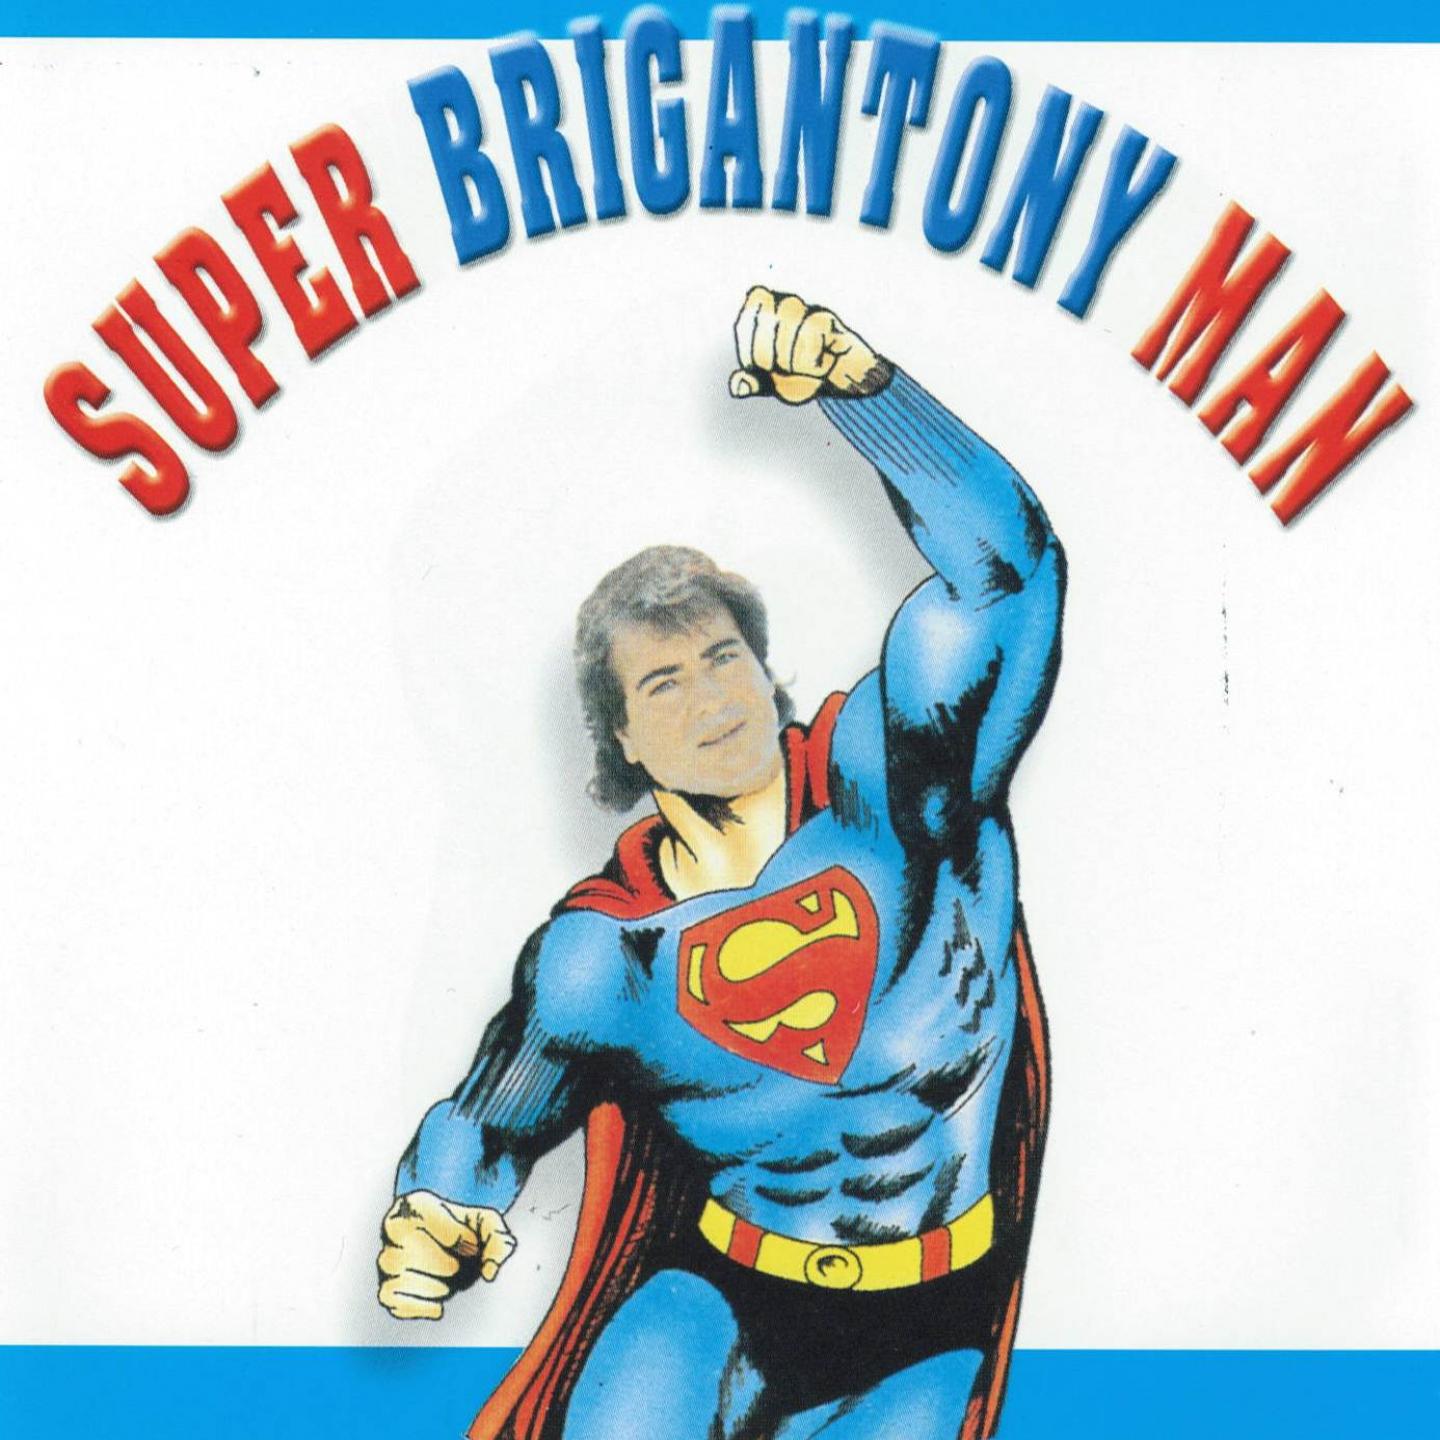 Super Brigantony Man